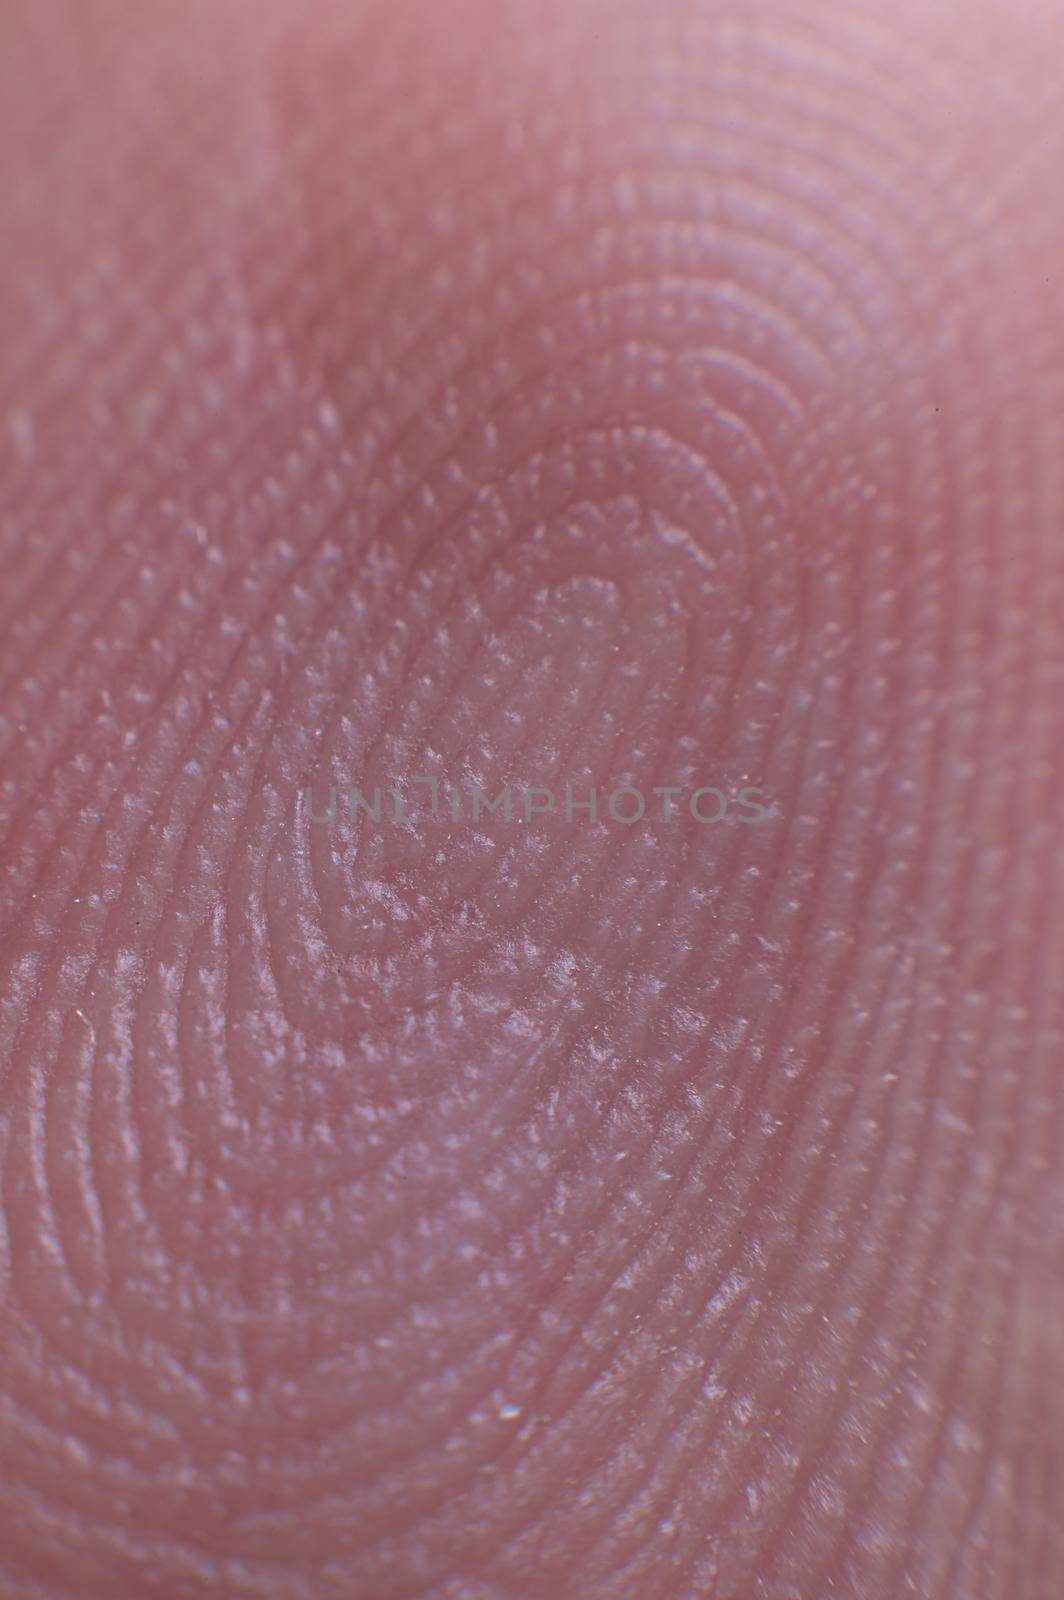 Close-up surface Fingerprint - extreme macro photography. Biometrics and fingerprinting by yanik88